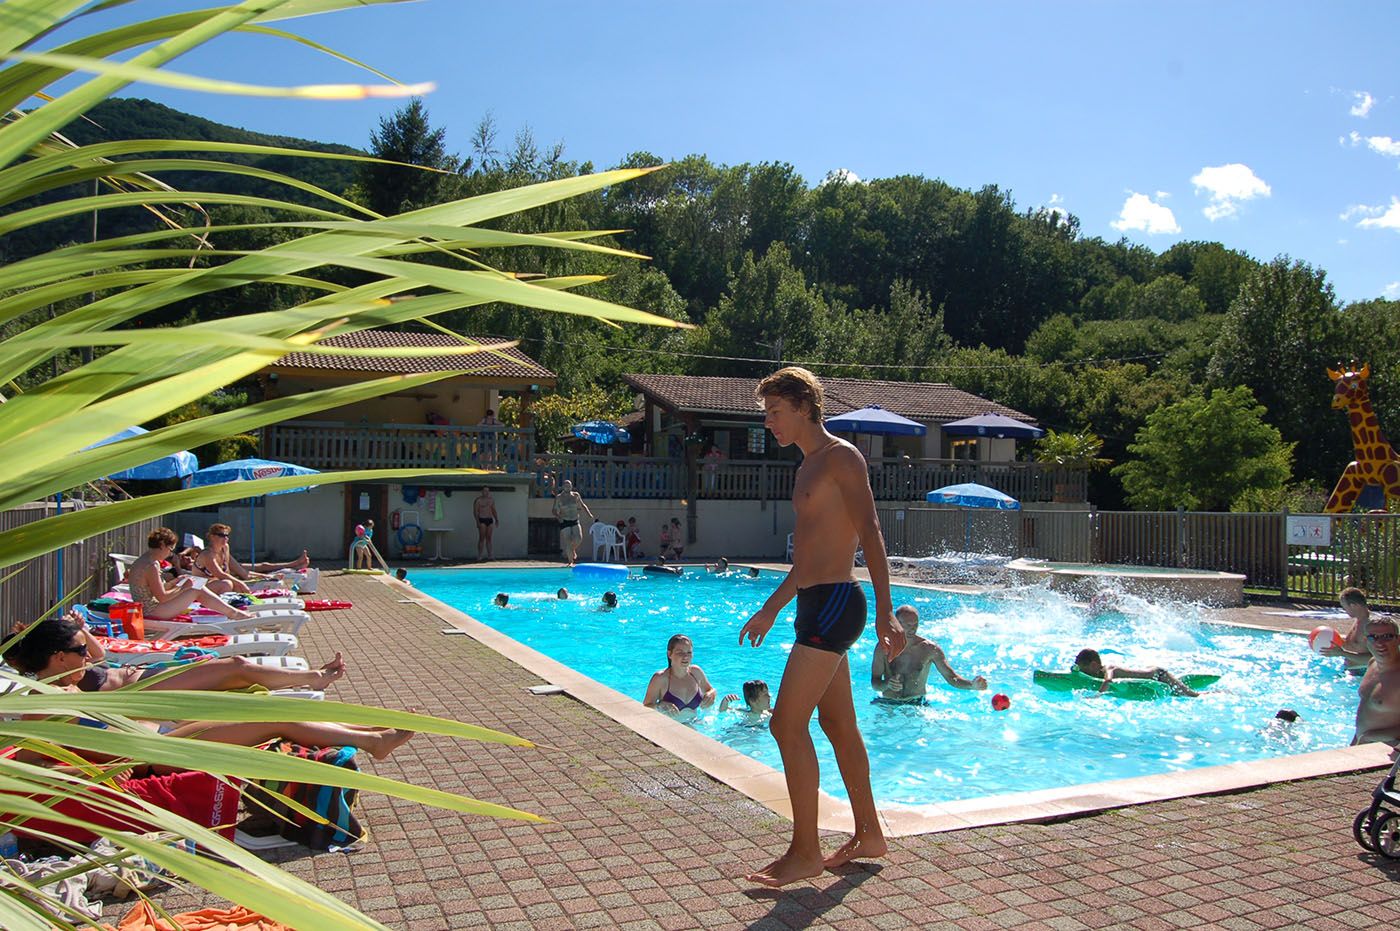 The campsite swimming pool